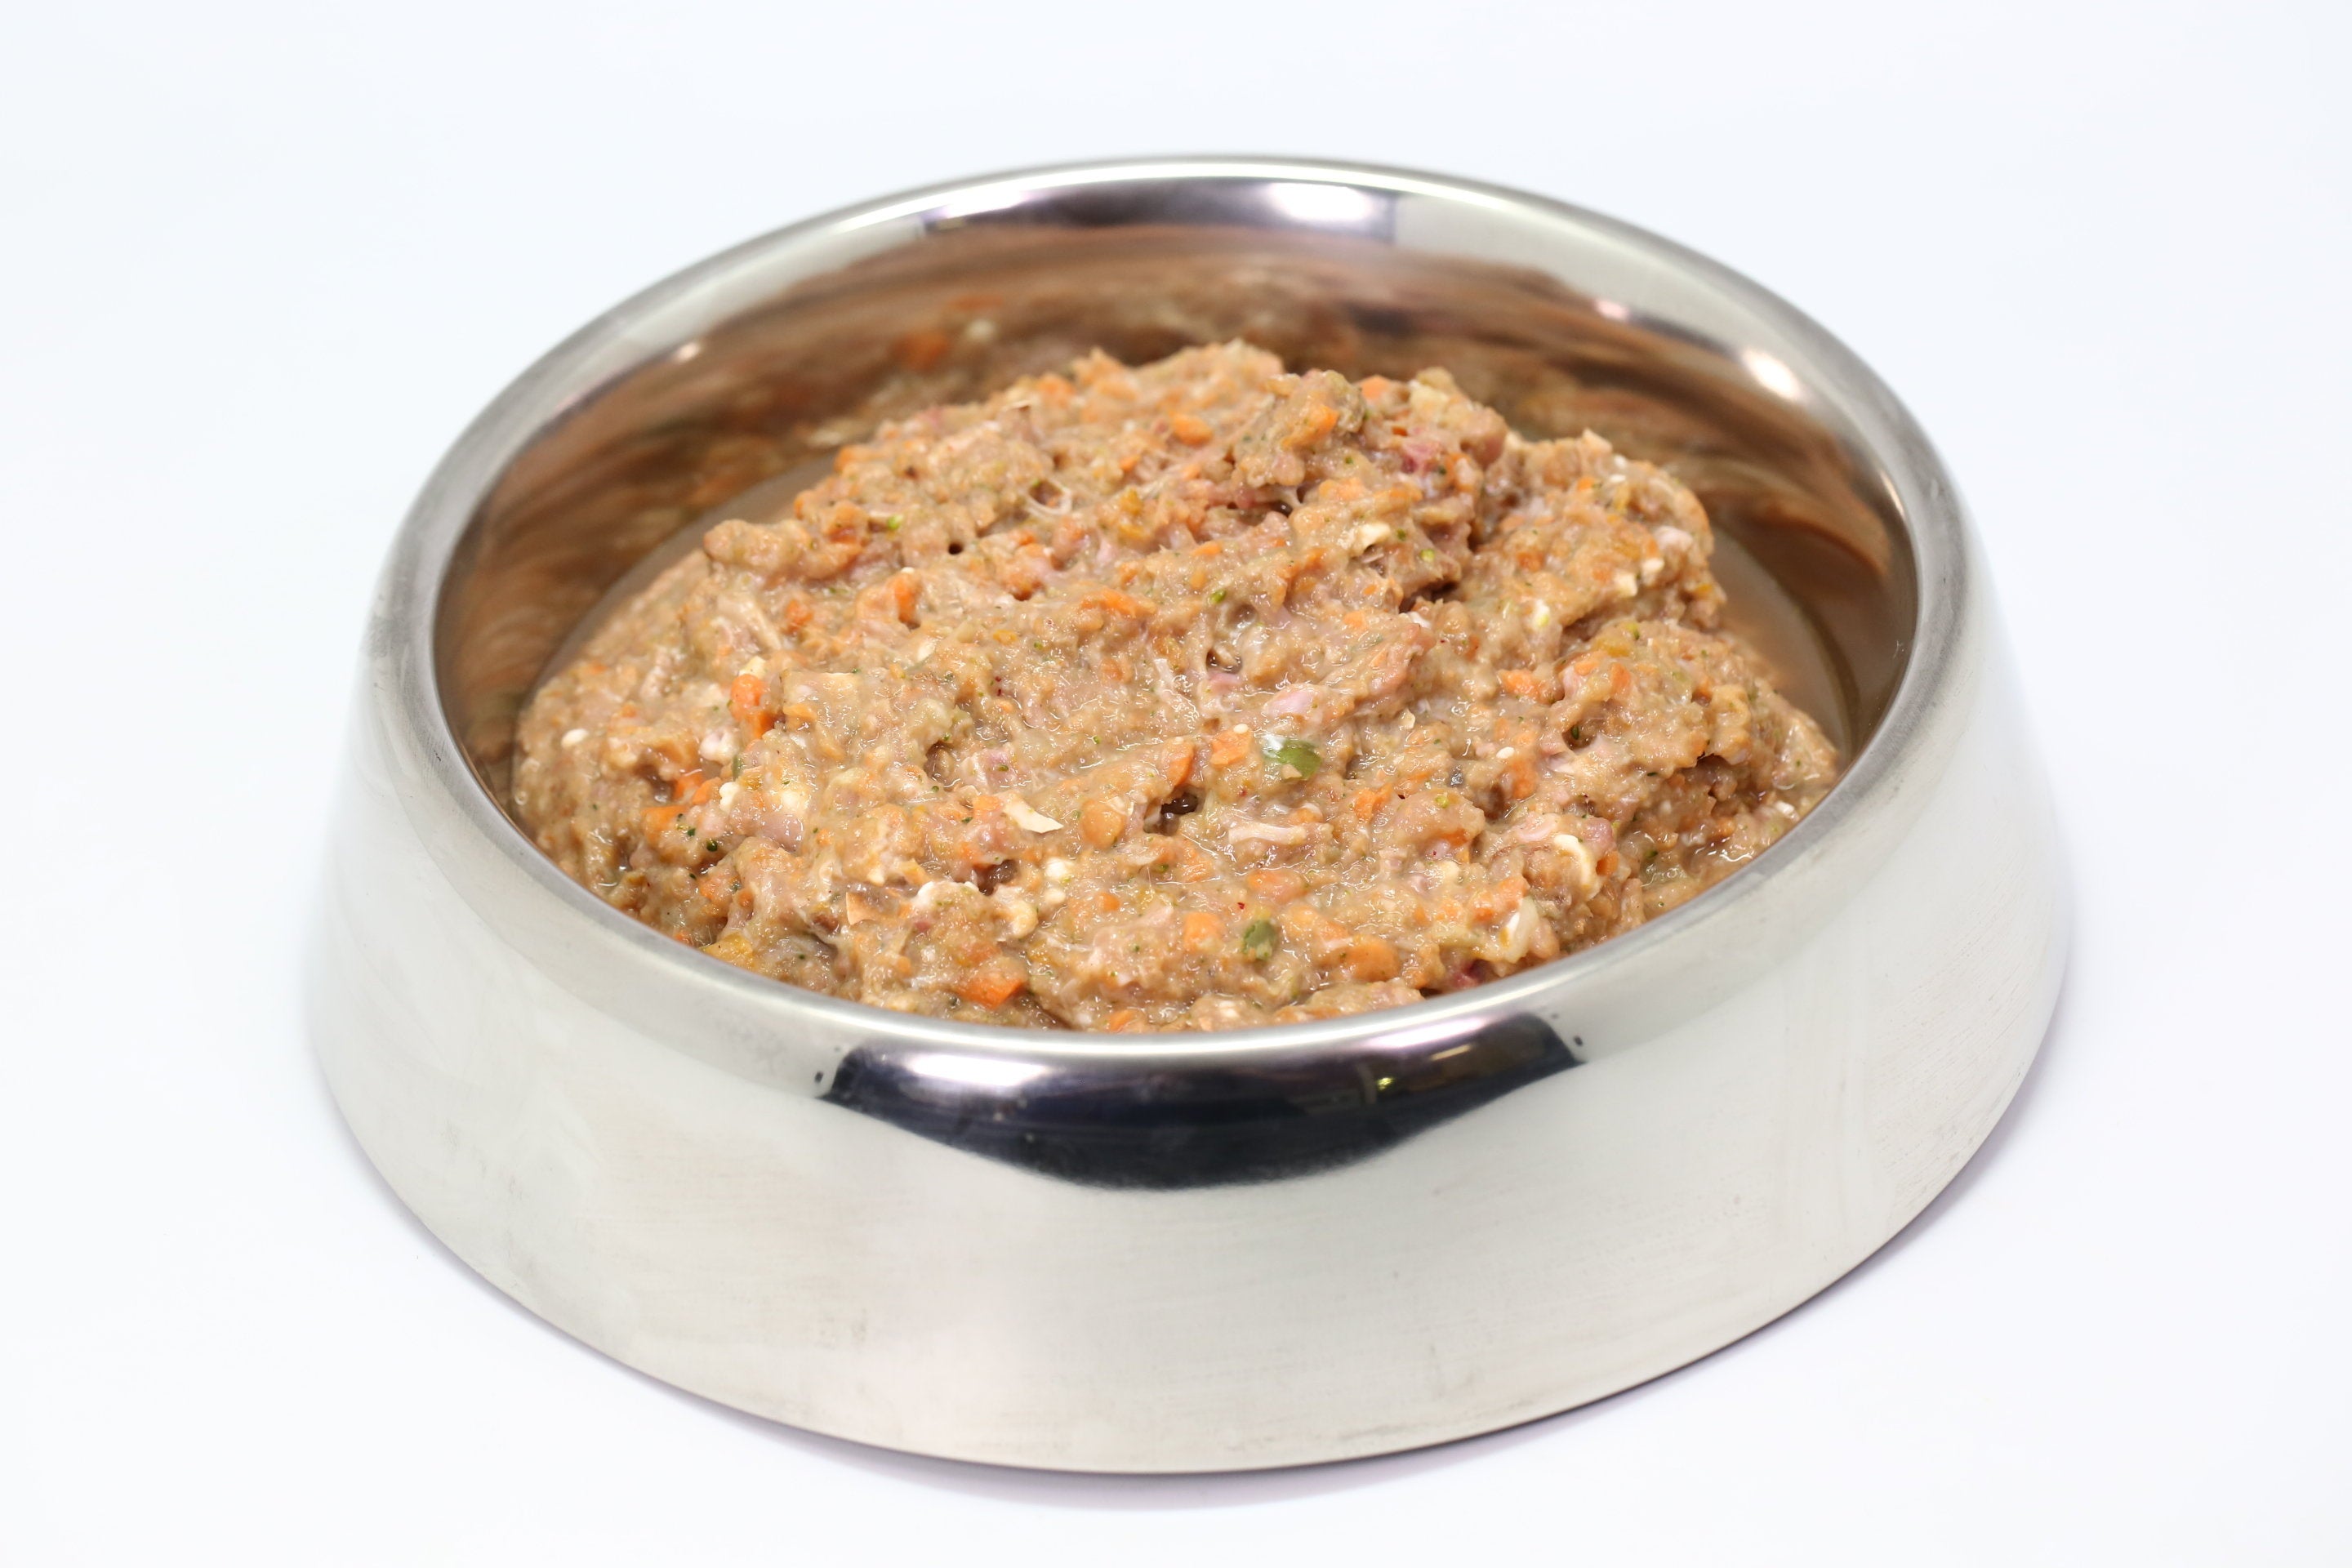 Somerford Raw & Natural "GAME MEAT RANGE" - Adult Dog Food Duck & Veg Pack + FREE Meaty Bones